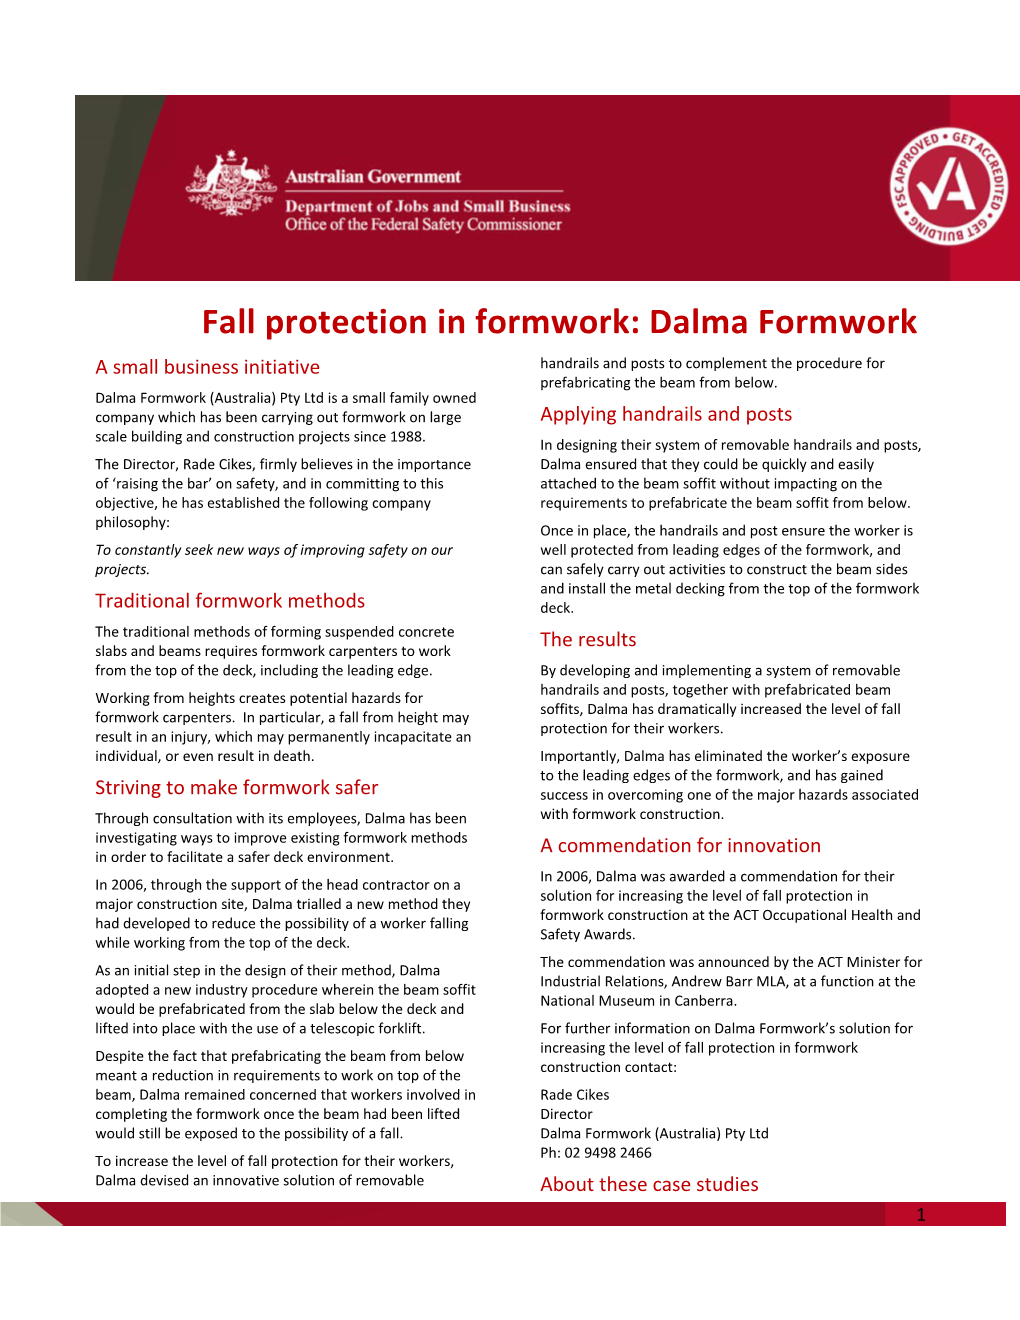 Fall Protection in Formwork: Dalma Formwork